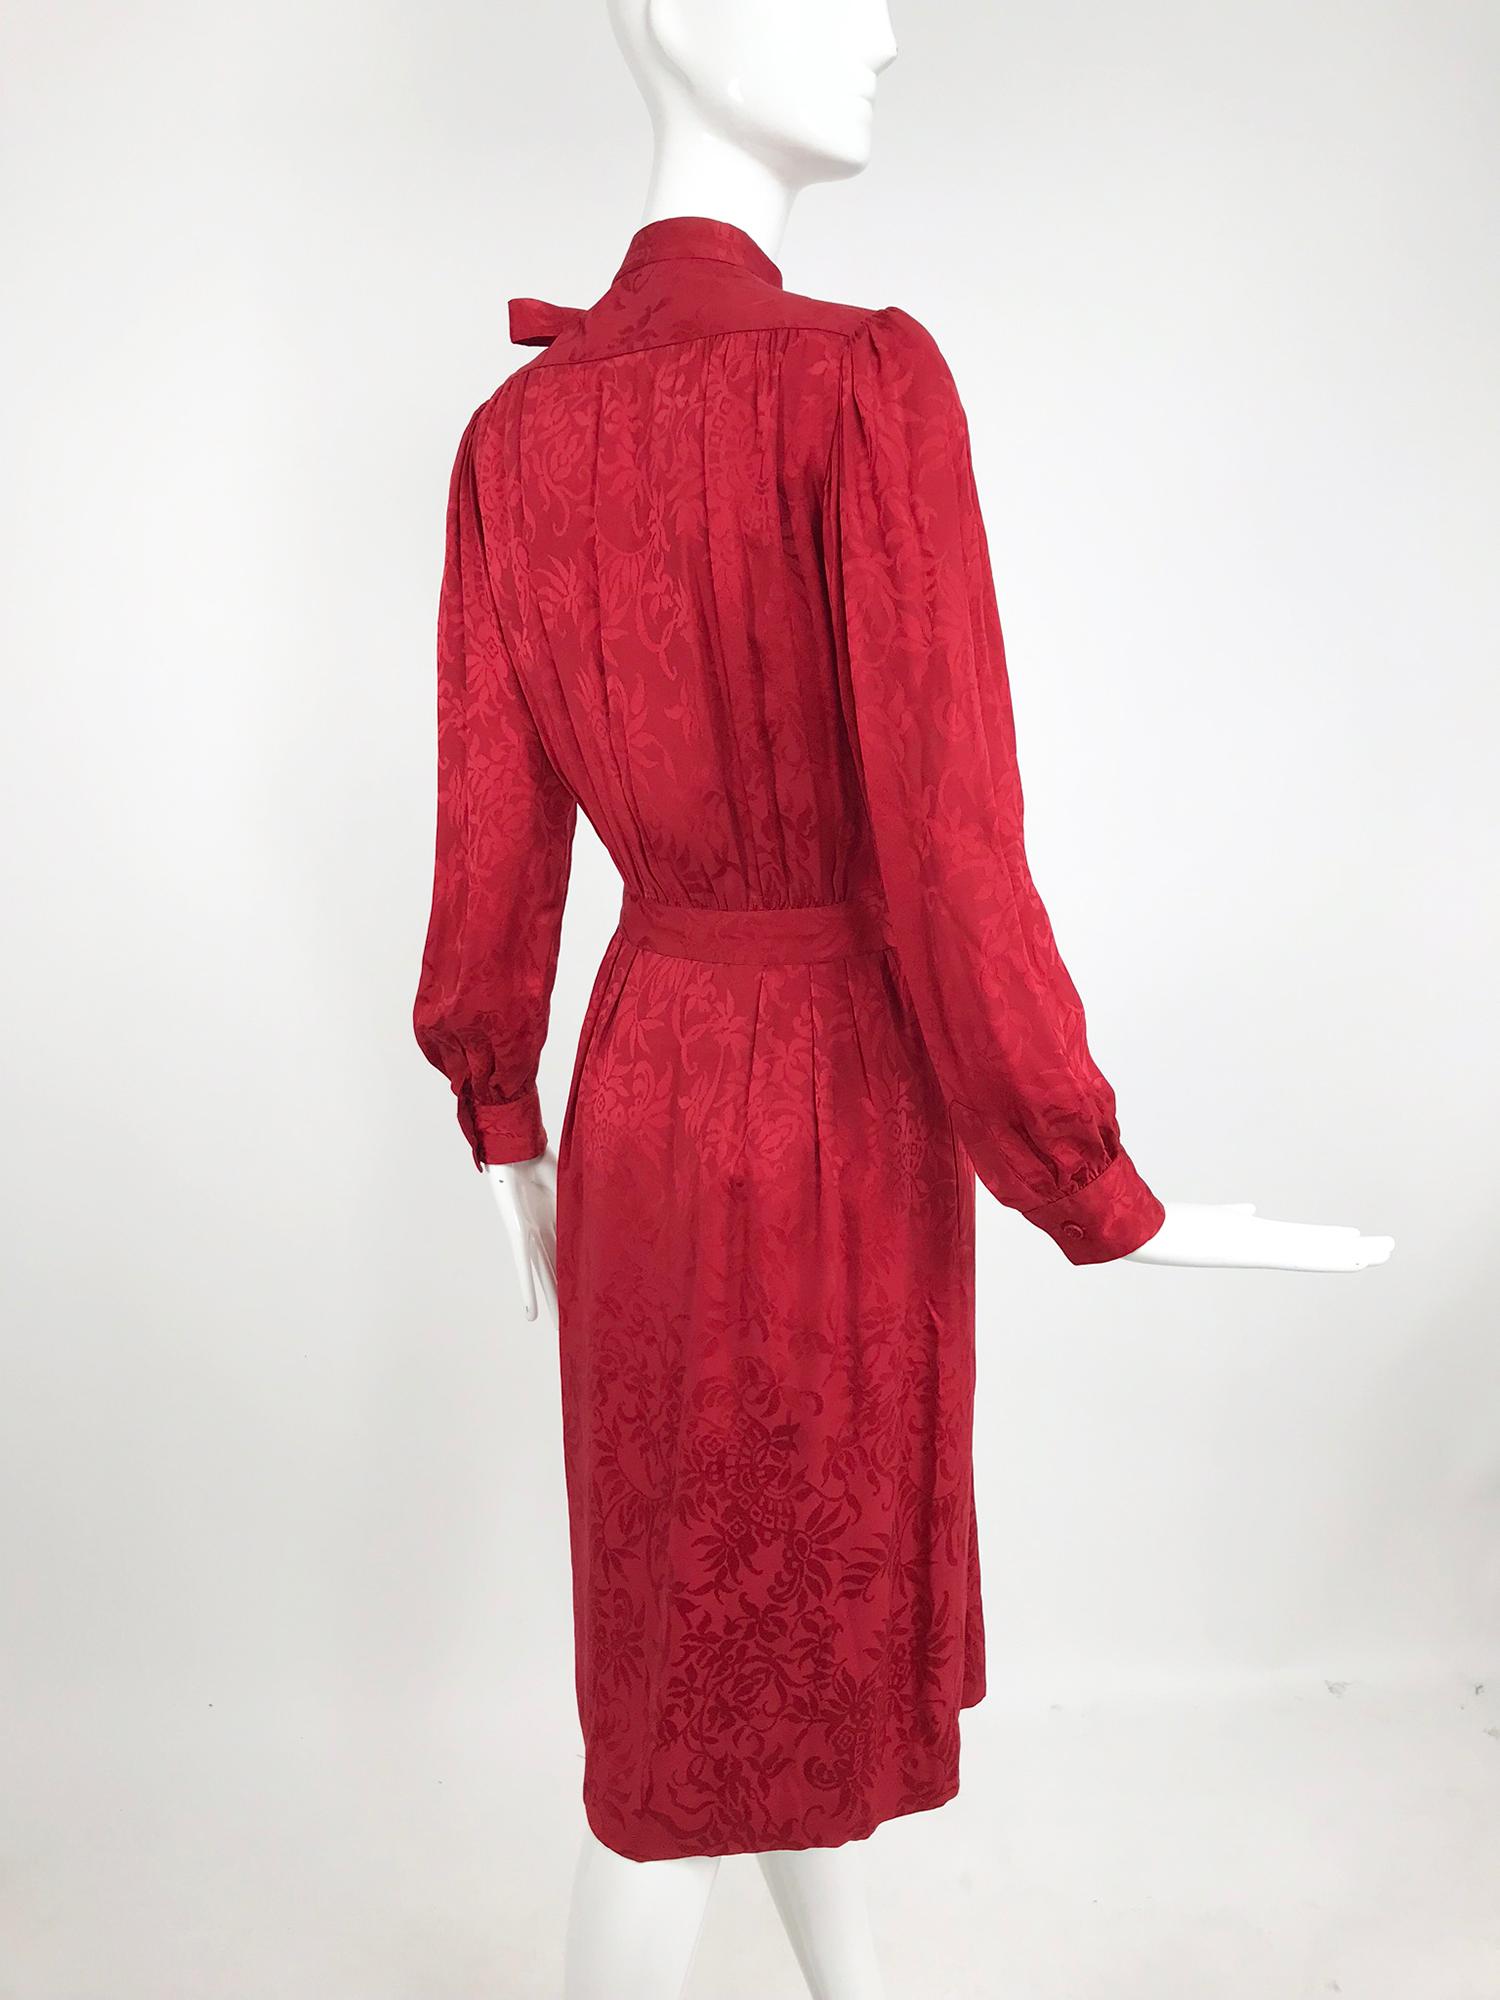 Yves Saint Laurent Red Silk Jacquard Bow Tie Dress 1970s 4